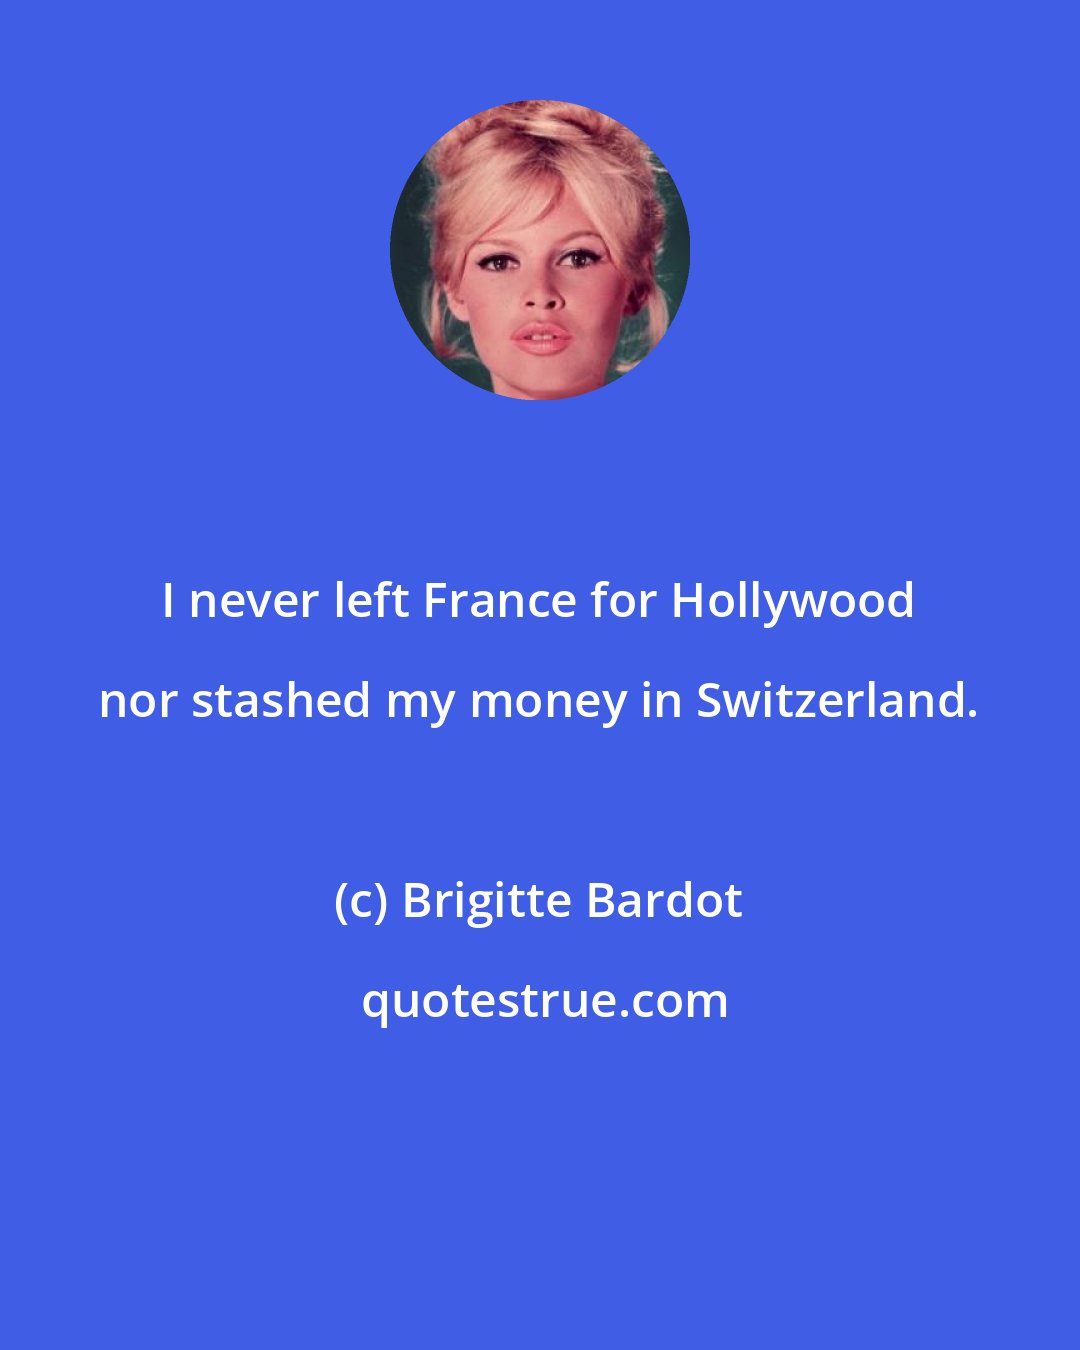 Brigitte Bardot: I never left France for Hollywood nor stashed my money in Switzerland.